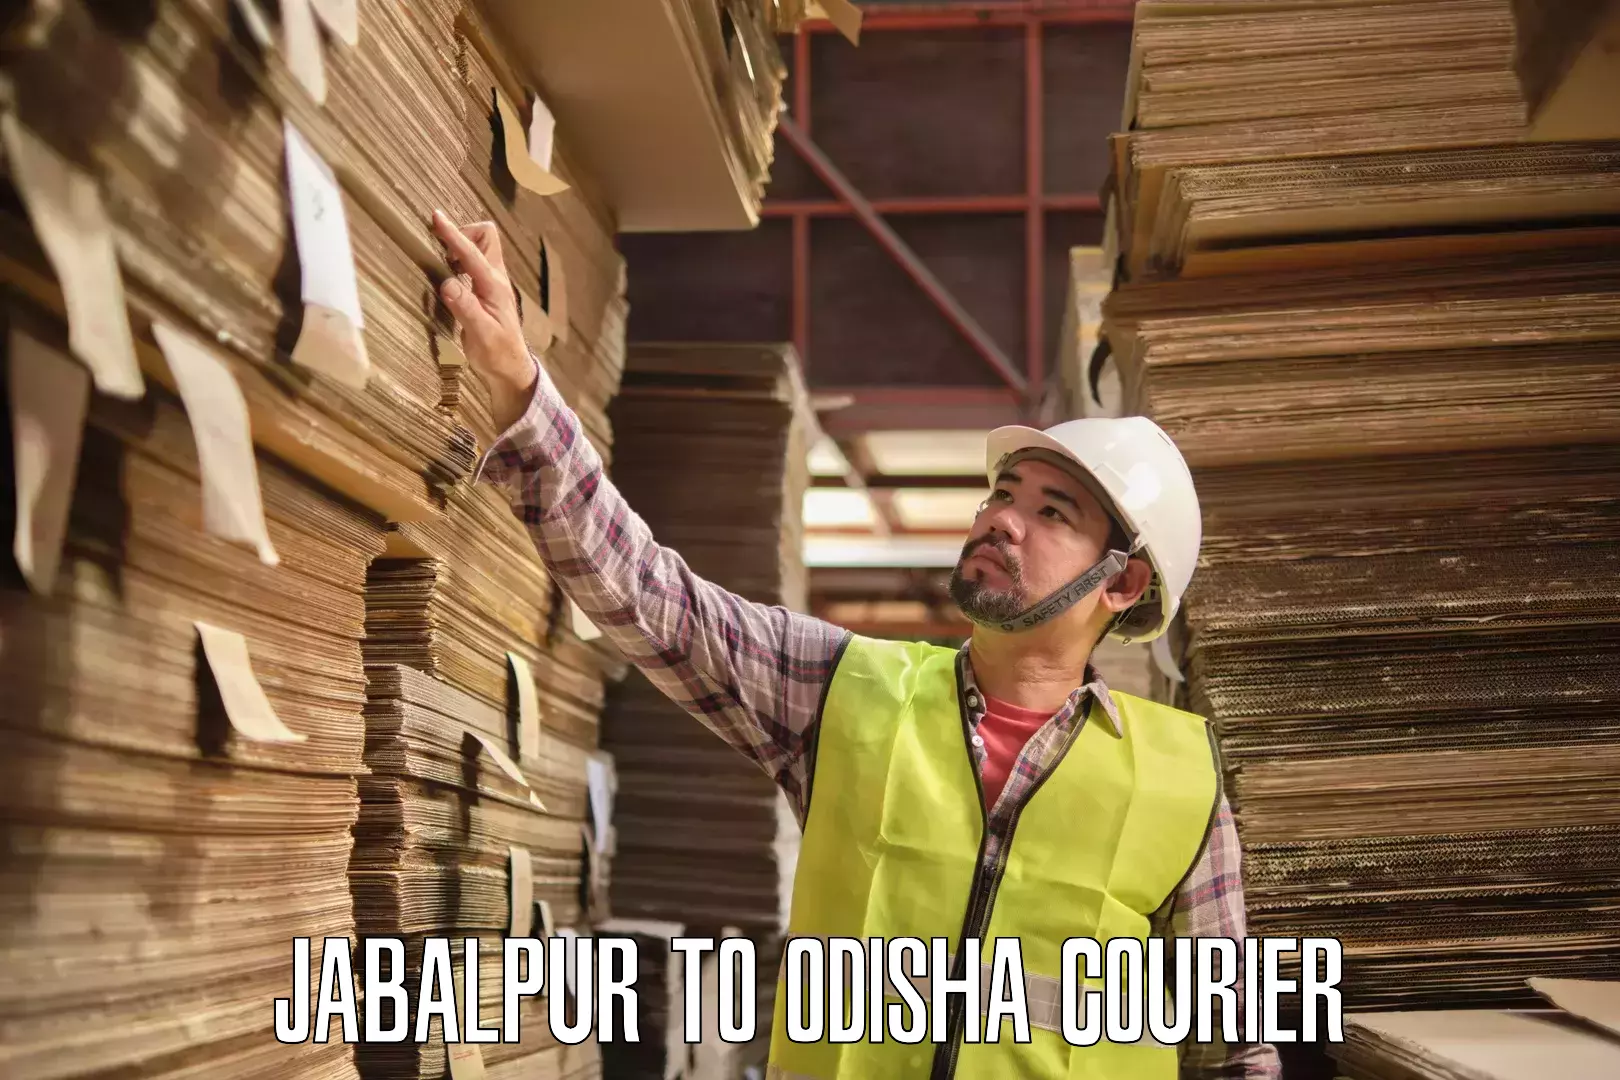 Next-day delivery options Jabalpur to Chikiti